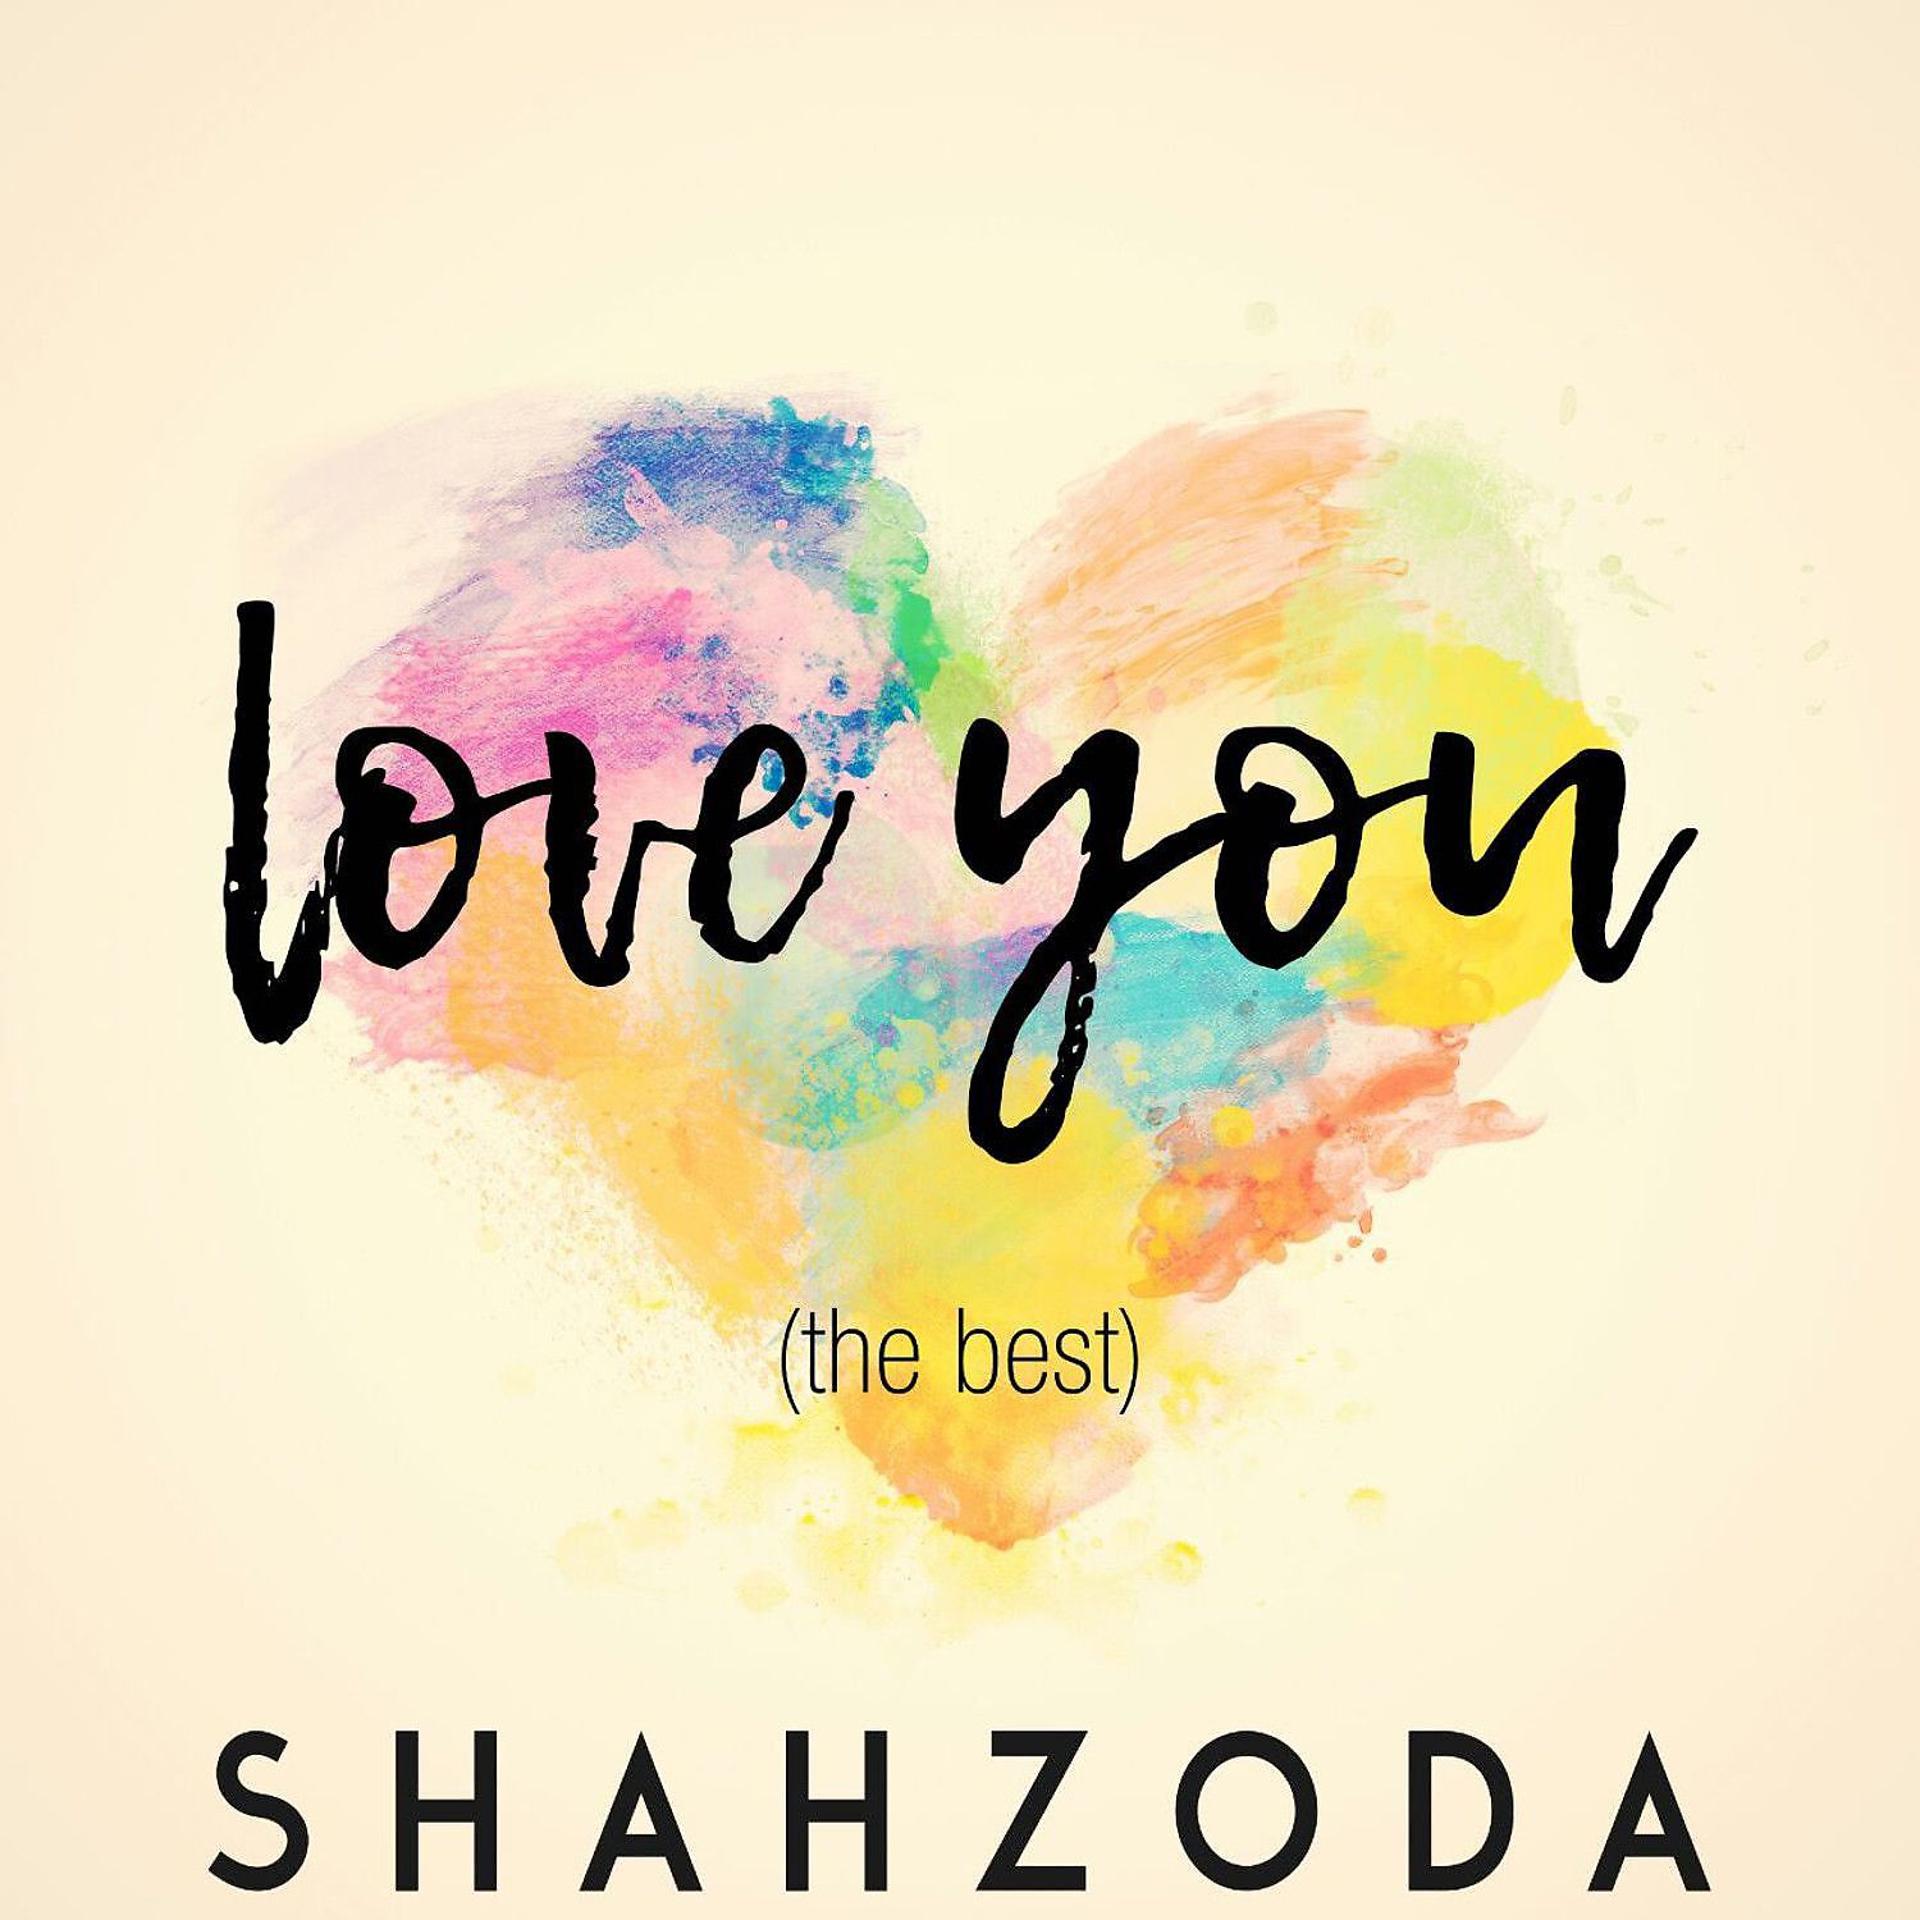 Постер к треку Shahzoda - Ayrilamiz